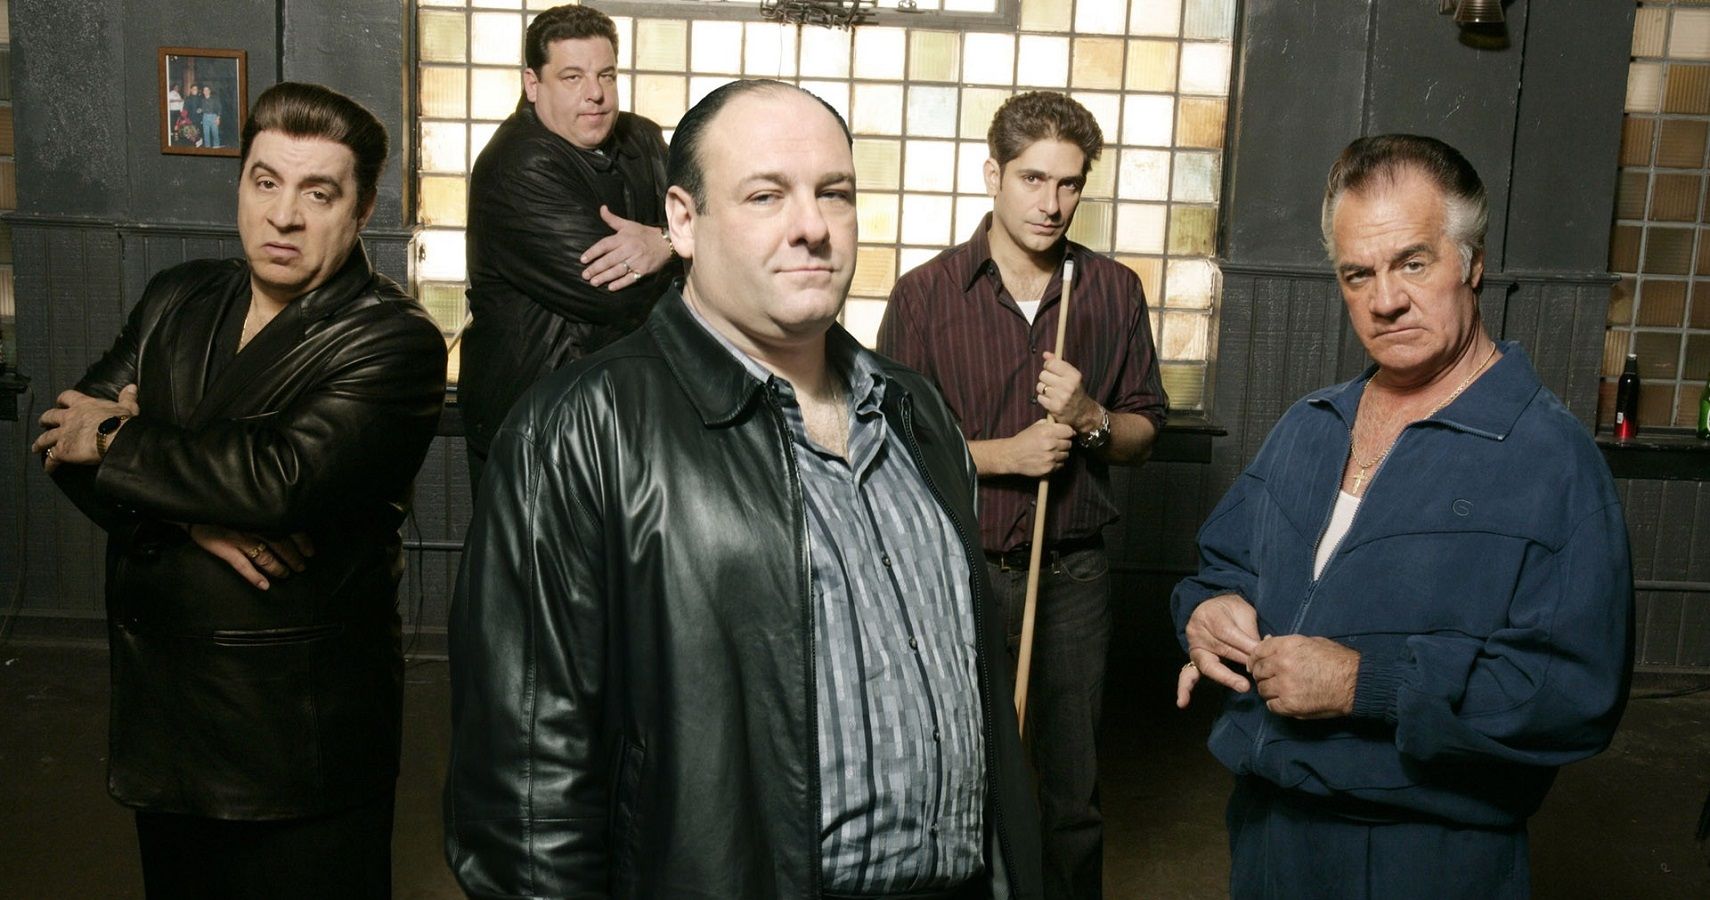 The Sopranos 10 Best Episodes Of Season 3 According To Imdb